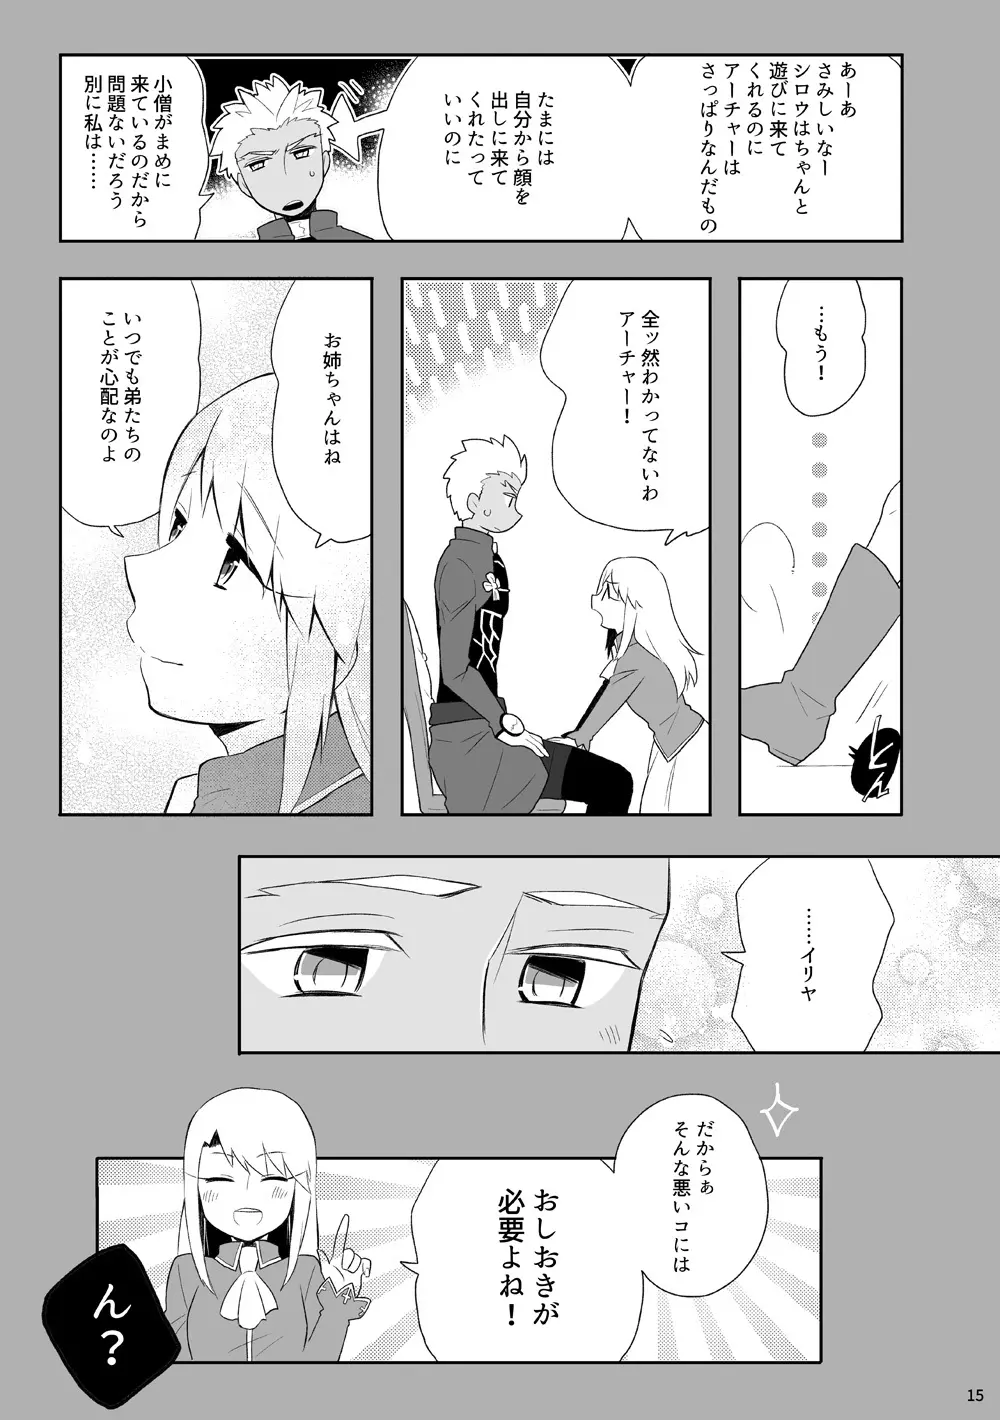 弓士本 - page14